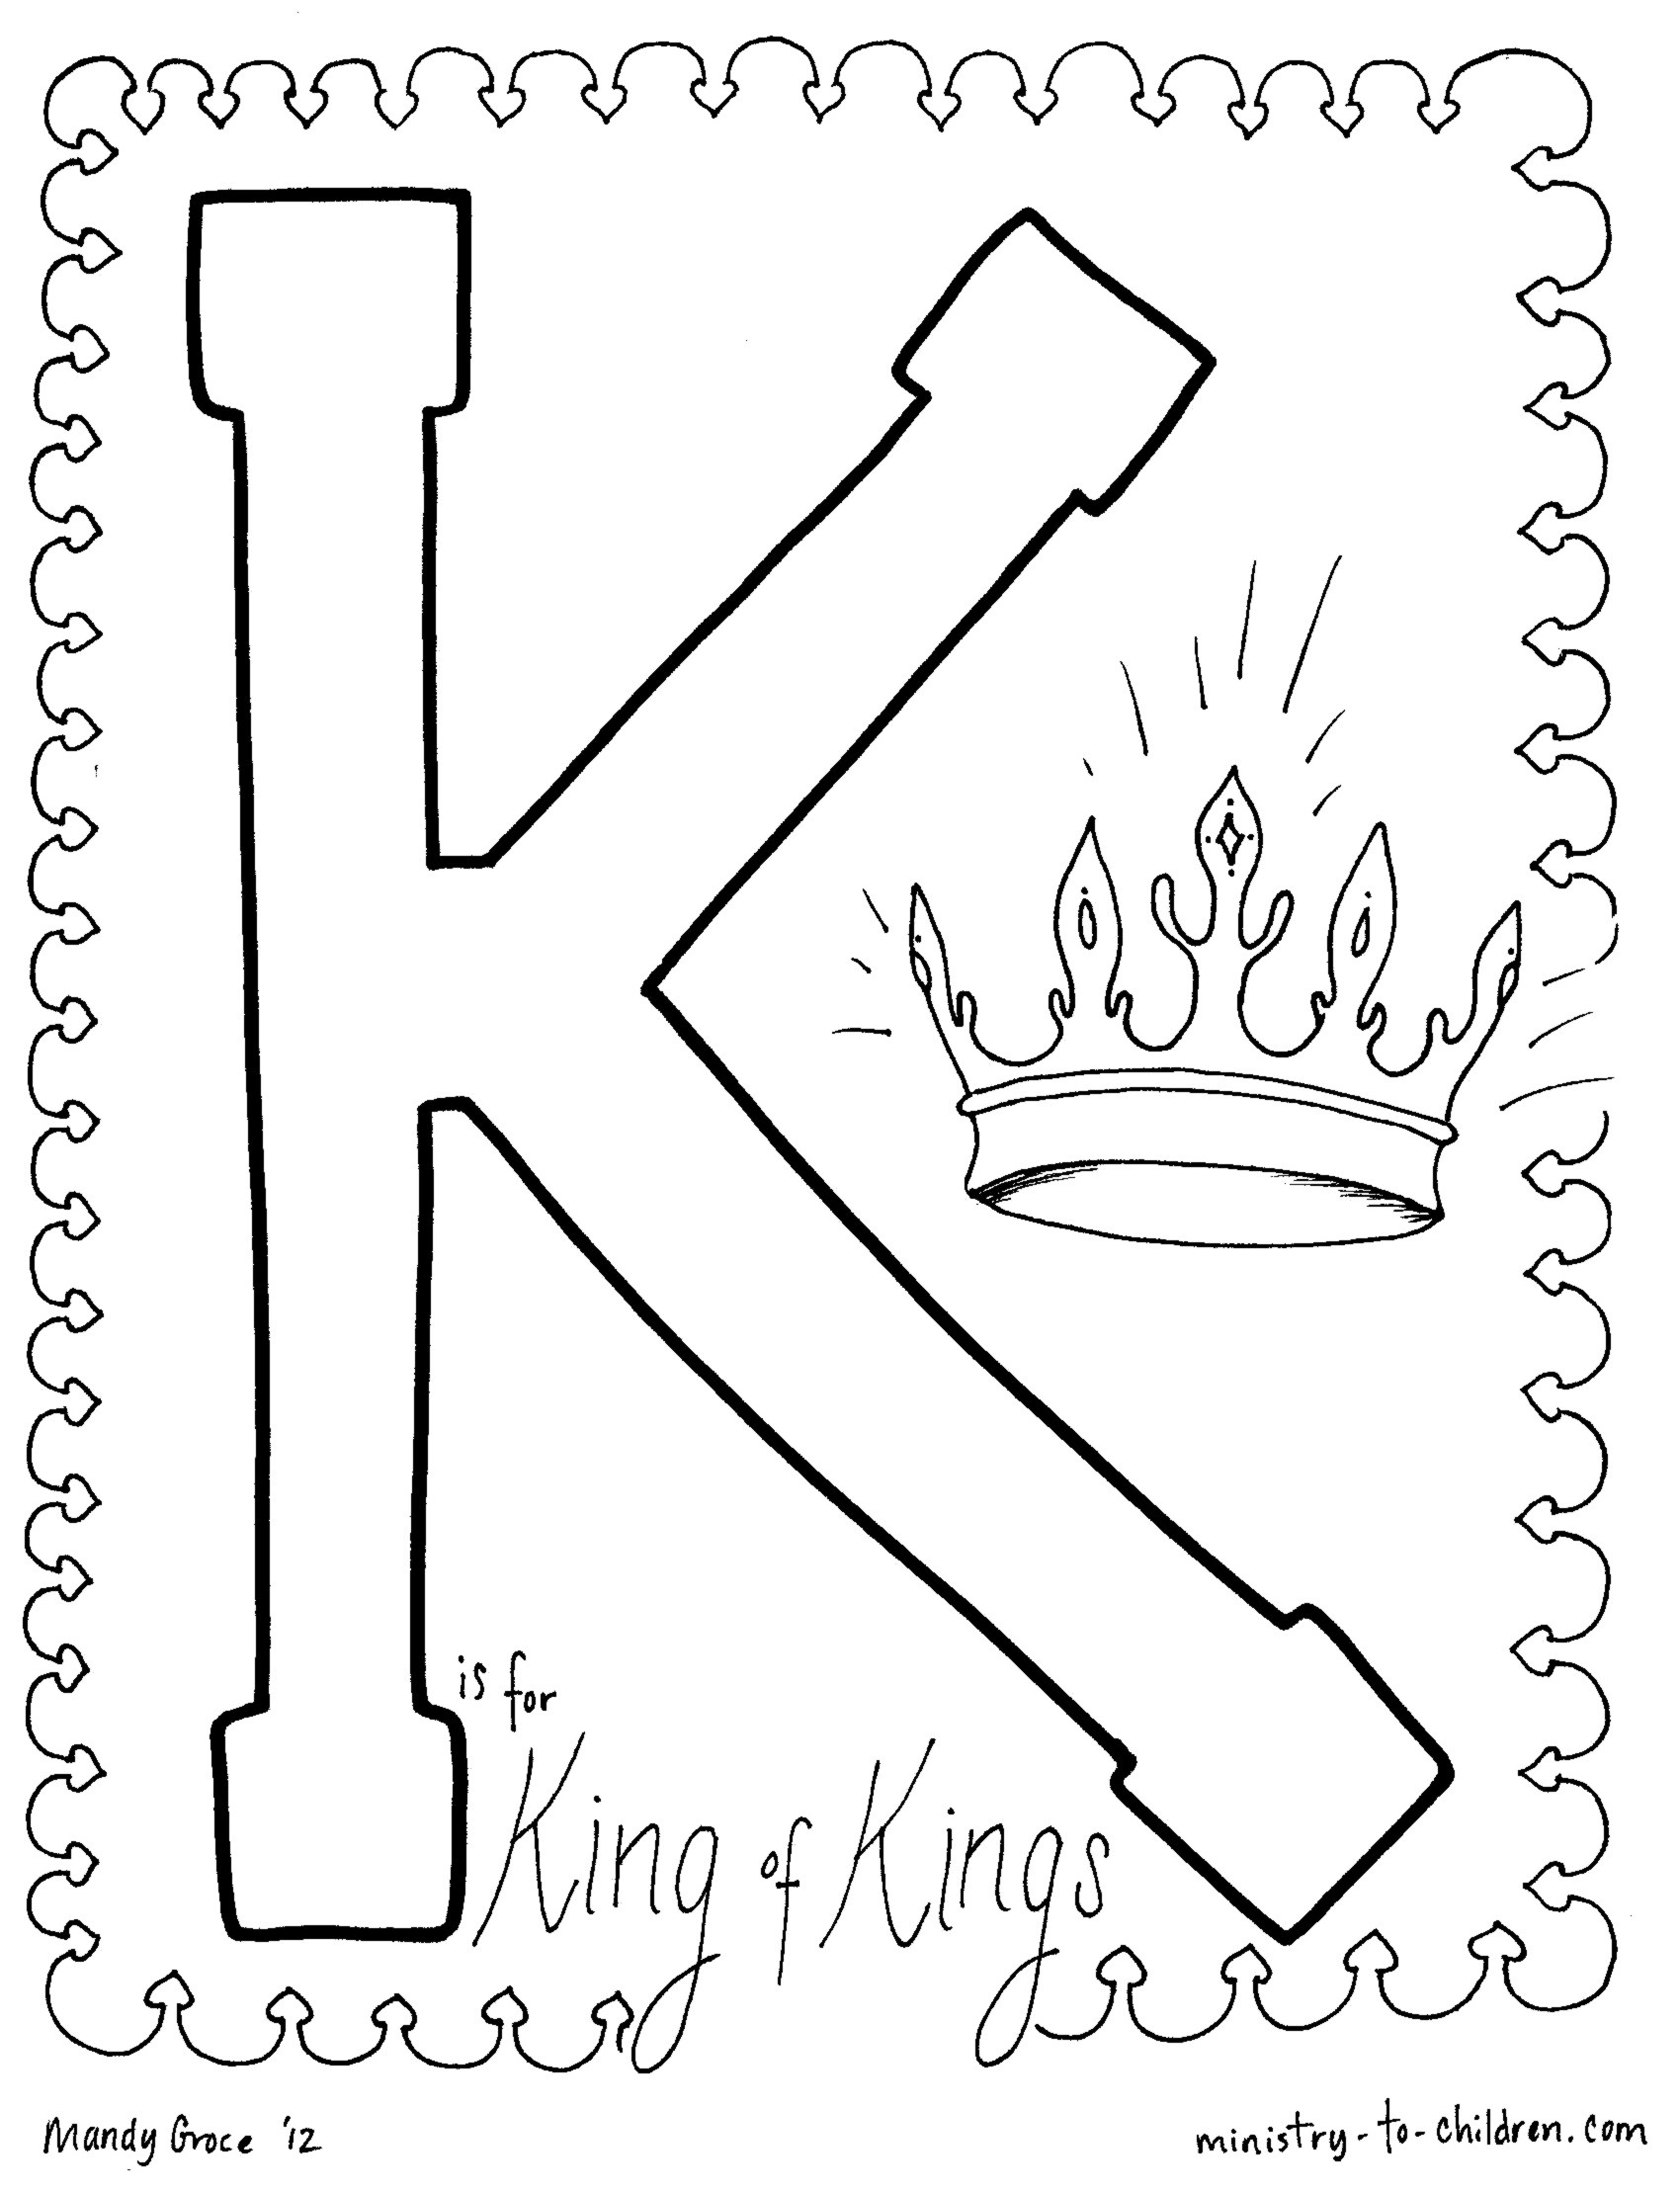 King Josiah Coloring Page at GetColorings.com | Free printable